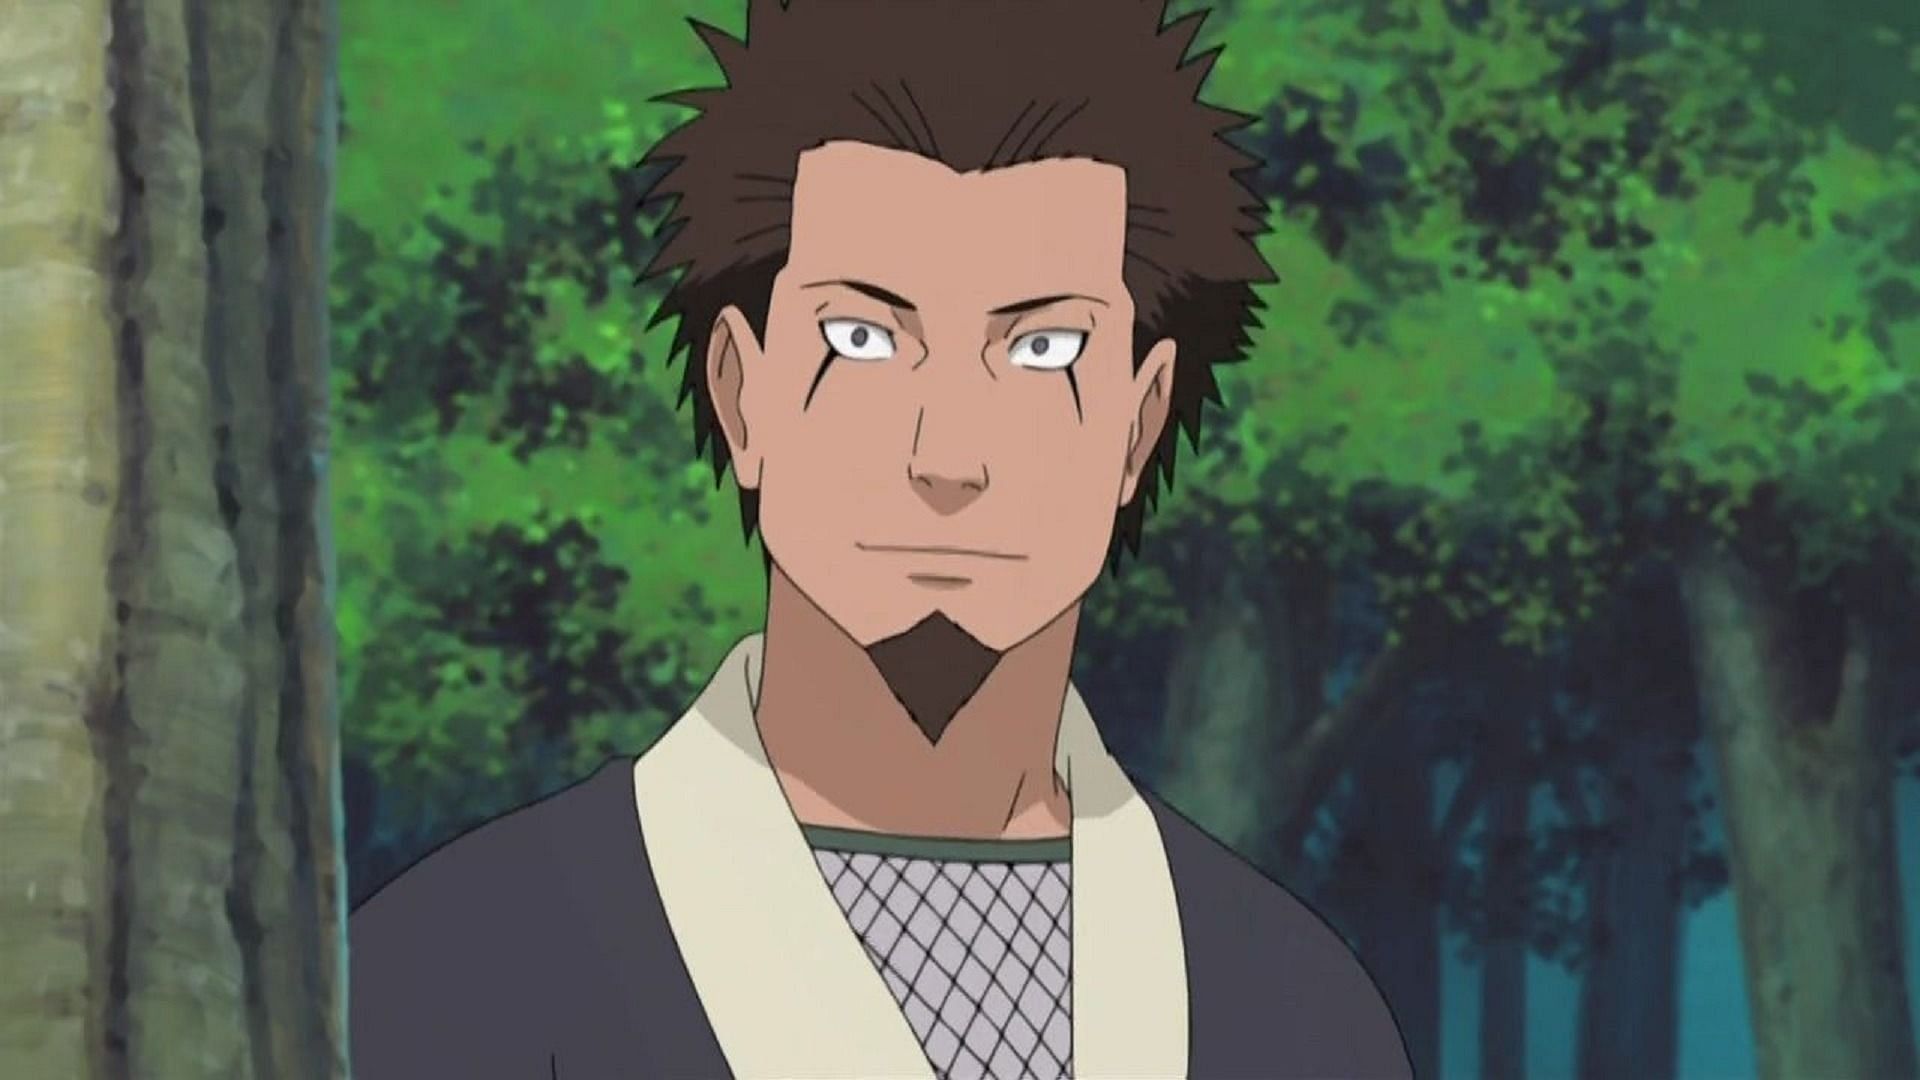 Hiruzen Sarutobi as seen in Naruto (Image via Studio Pierrot)